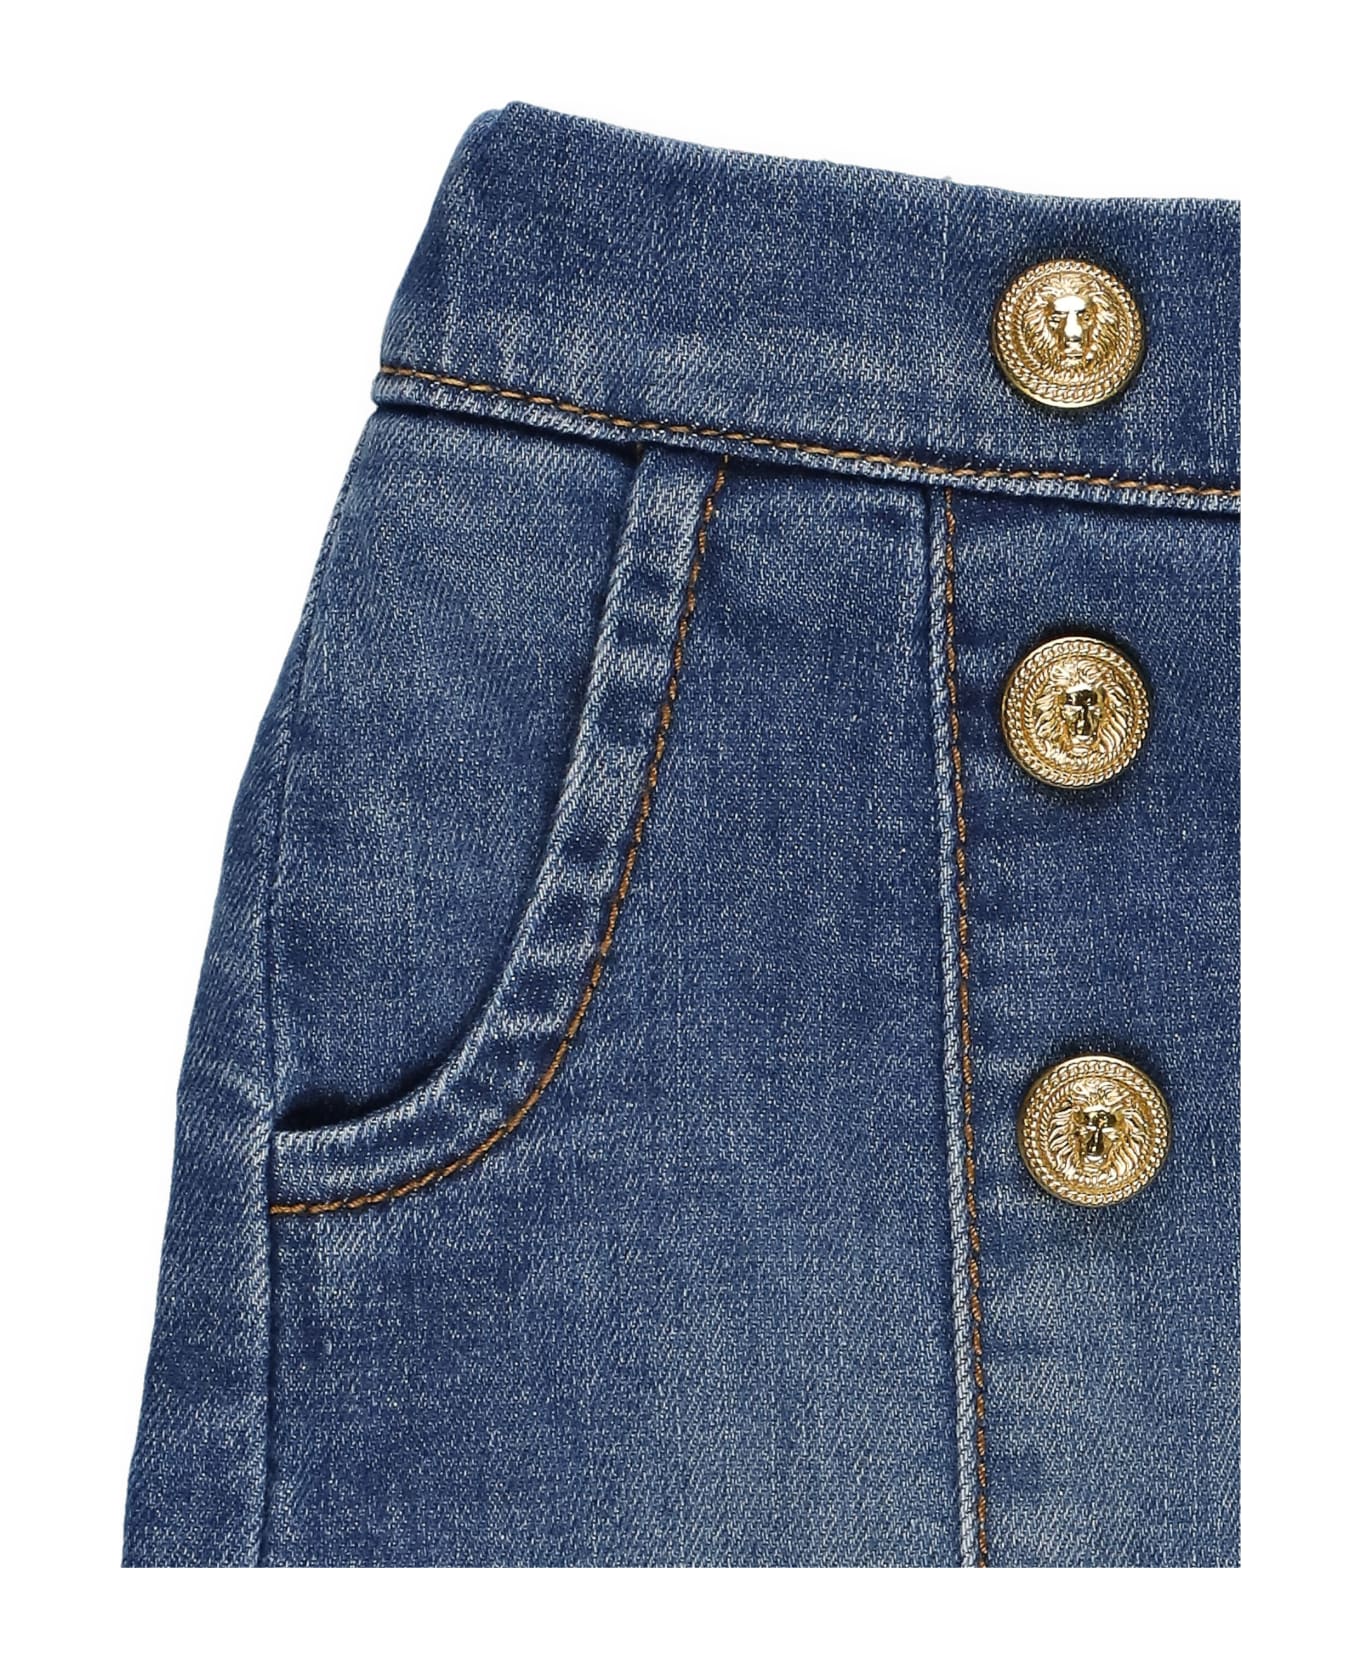 Balmain Cotton Shorts - Blue